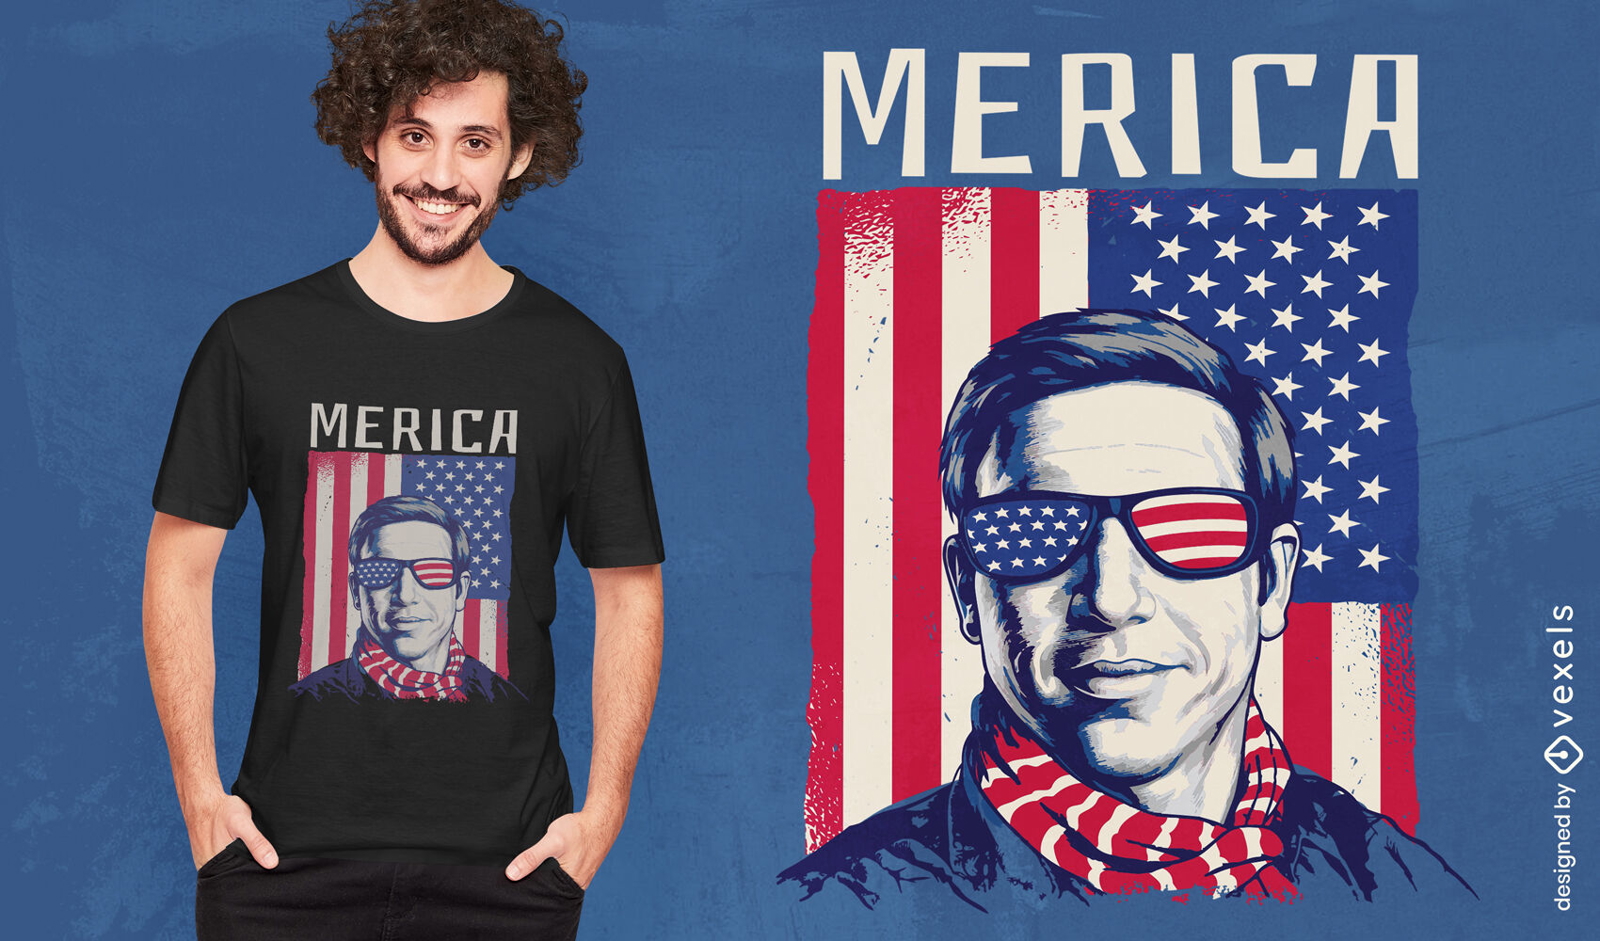 Merica man flag t-shirt design